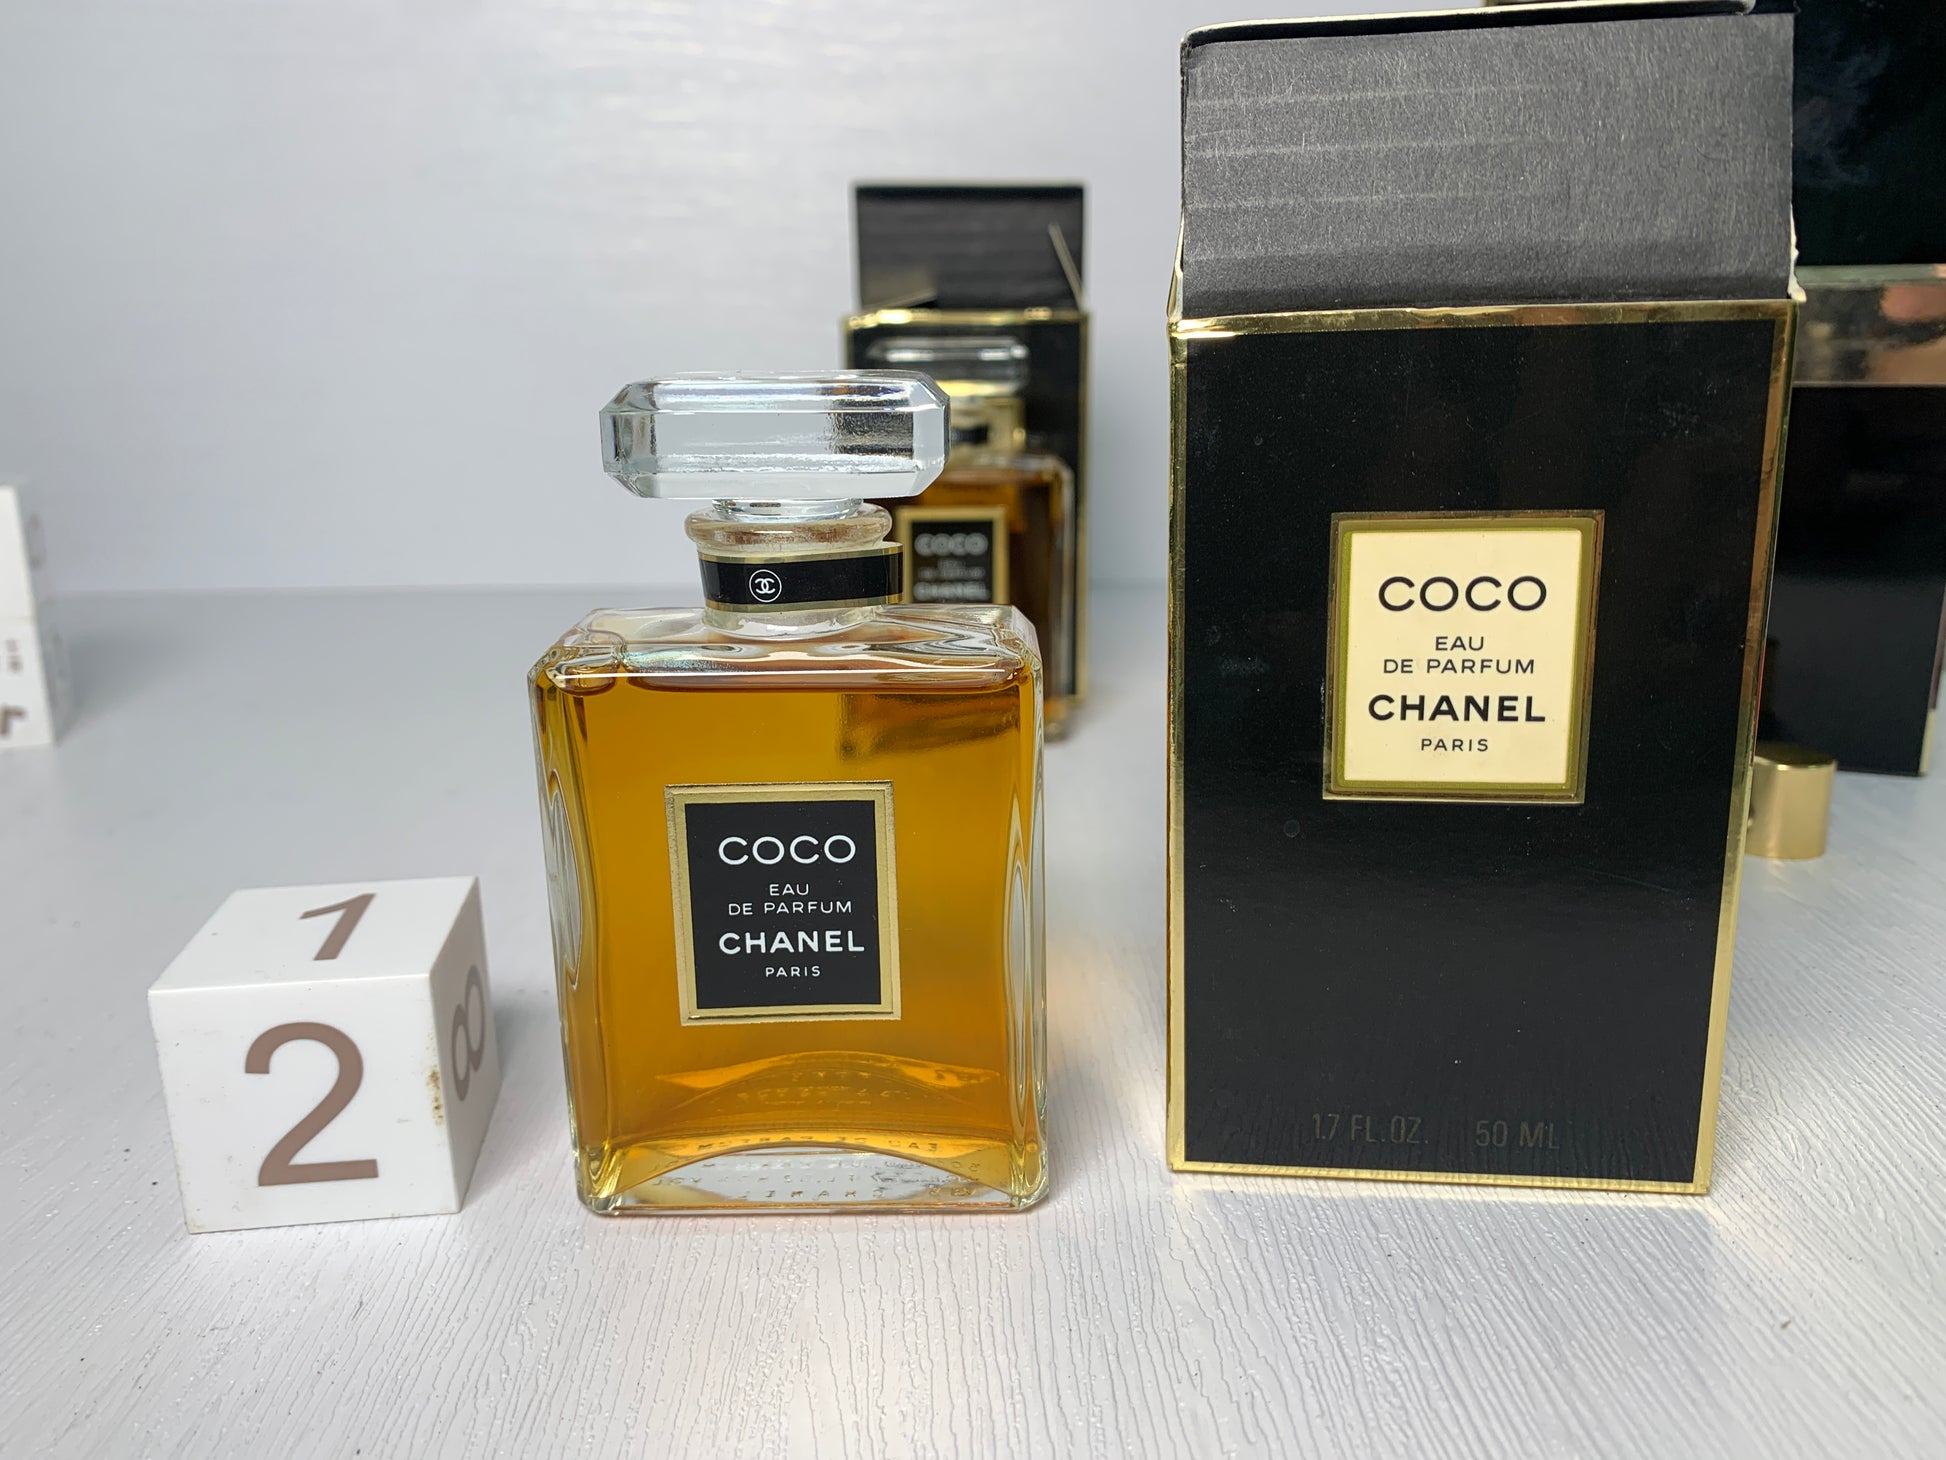 CHANEL COCO 3.4 oz Perfume Women's Eau De Parfum Spray EDP NEW & SEALED BOX  $12.50 - PicClick